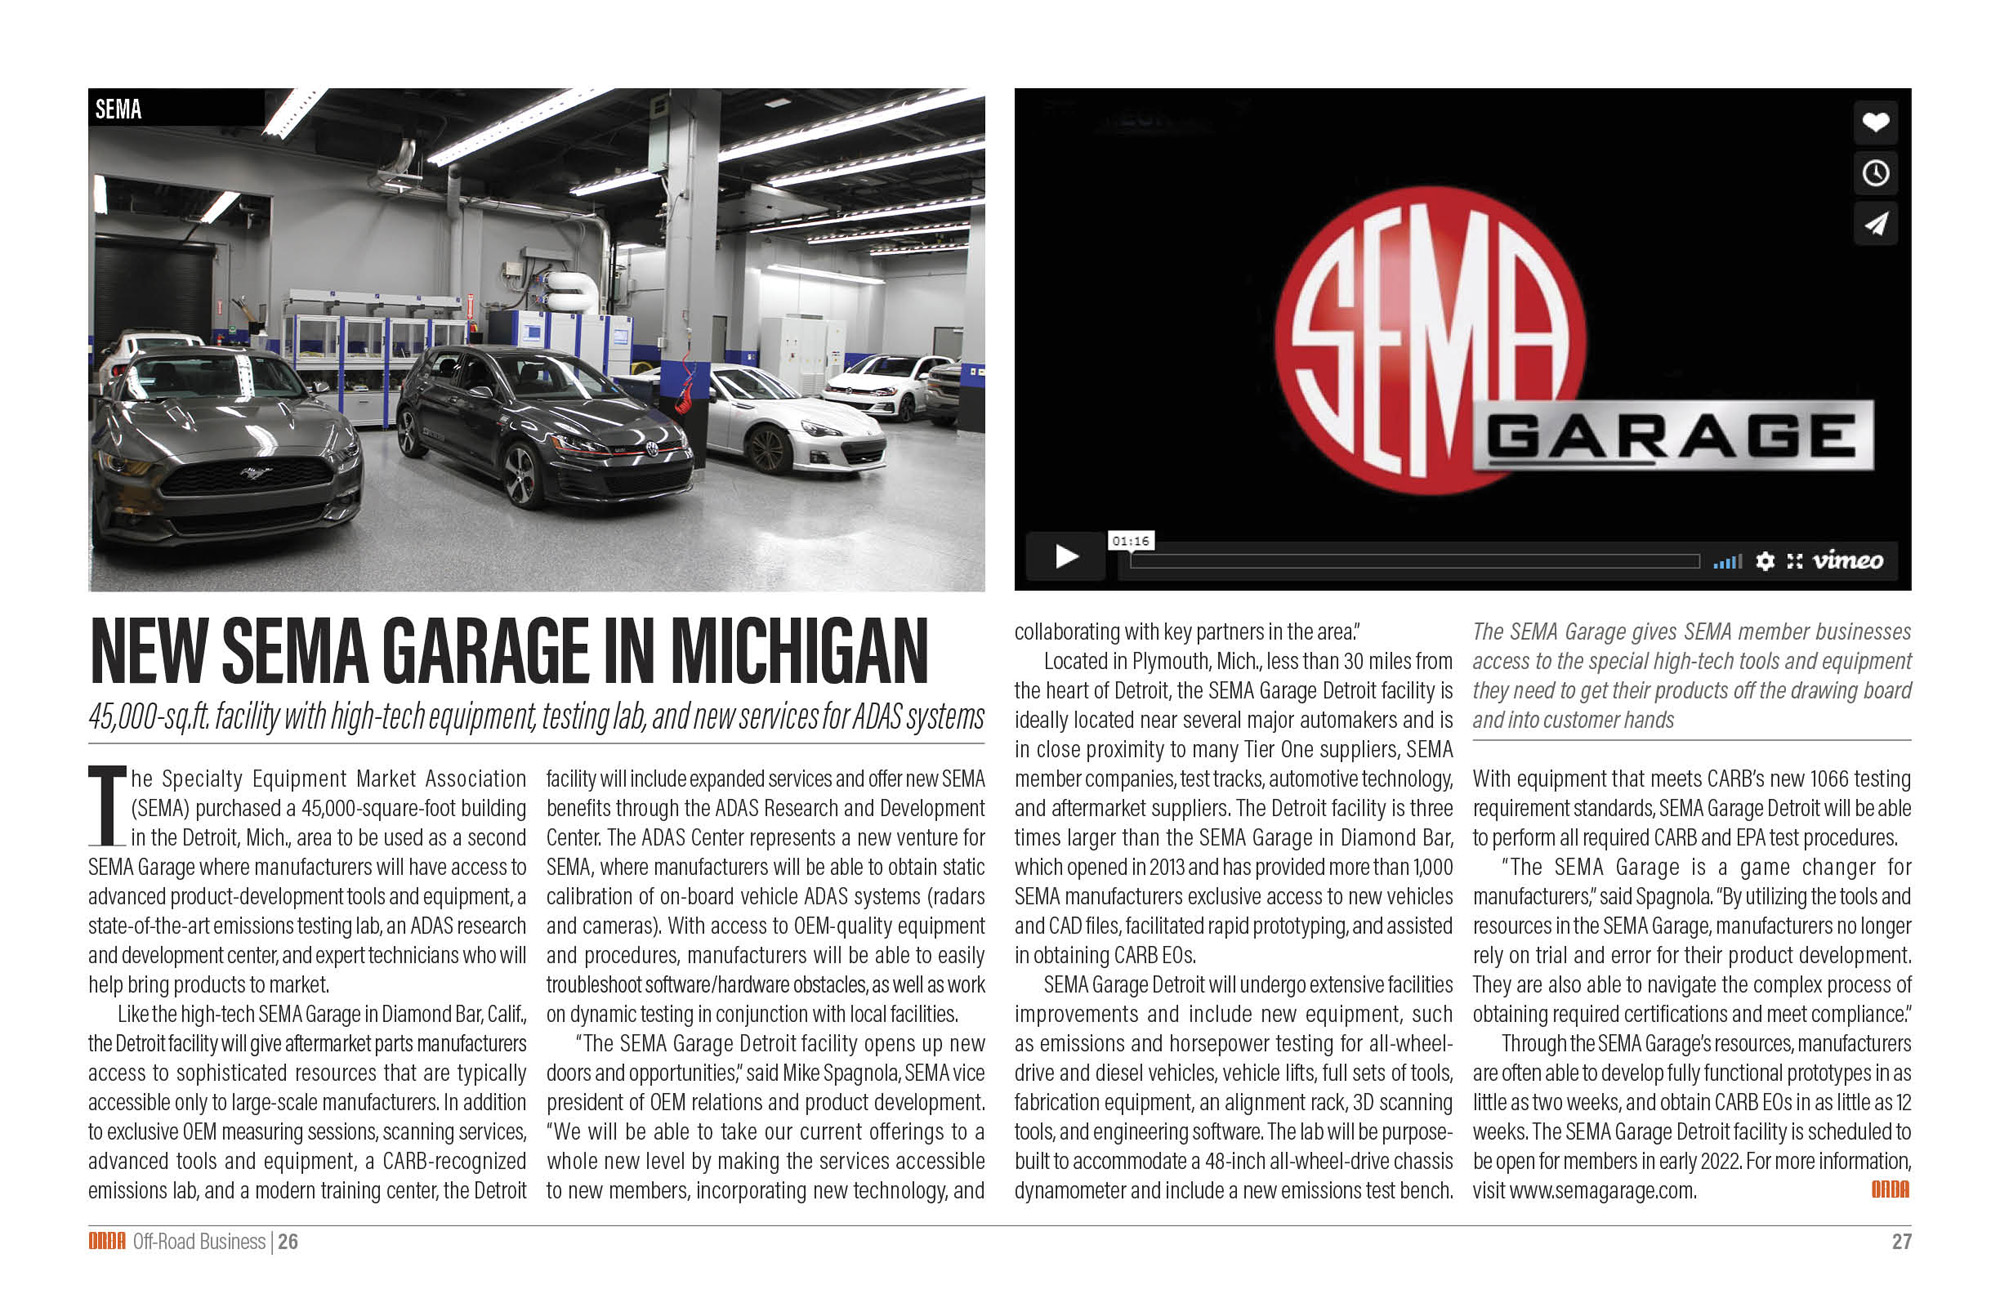 New SEMA Garage in Michigan